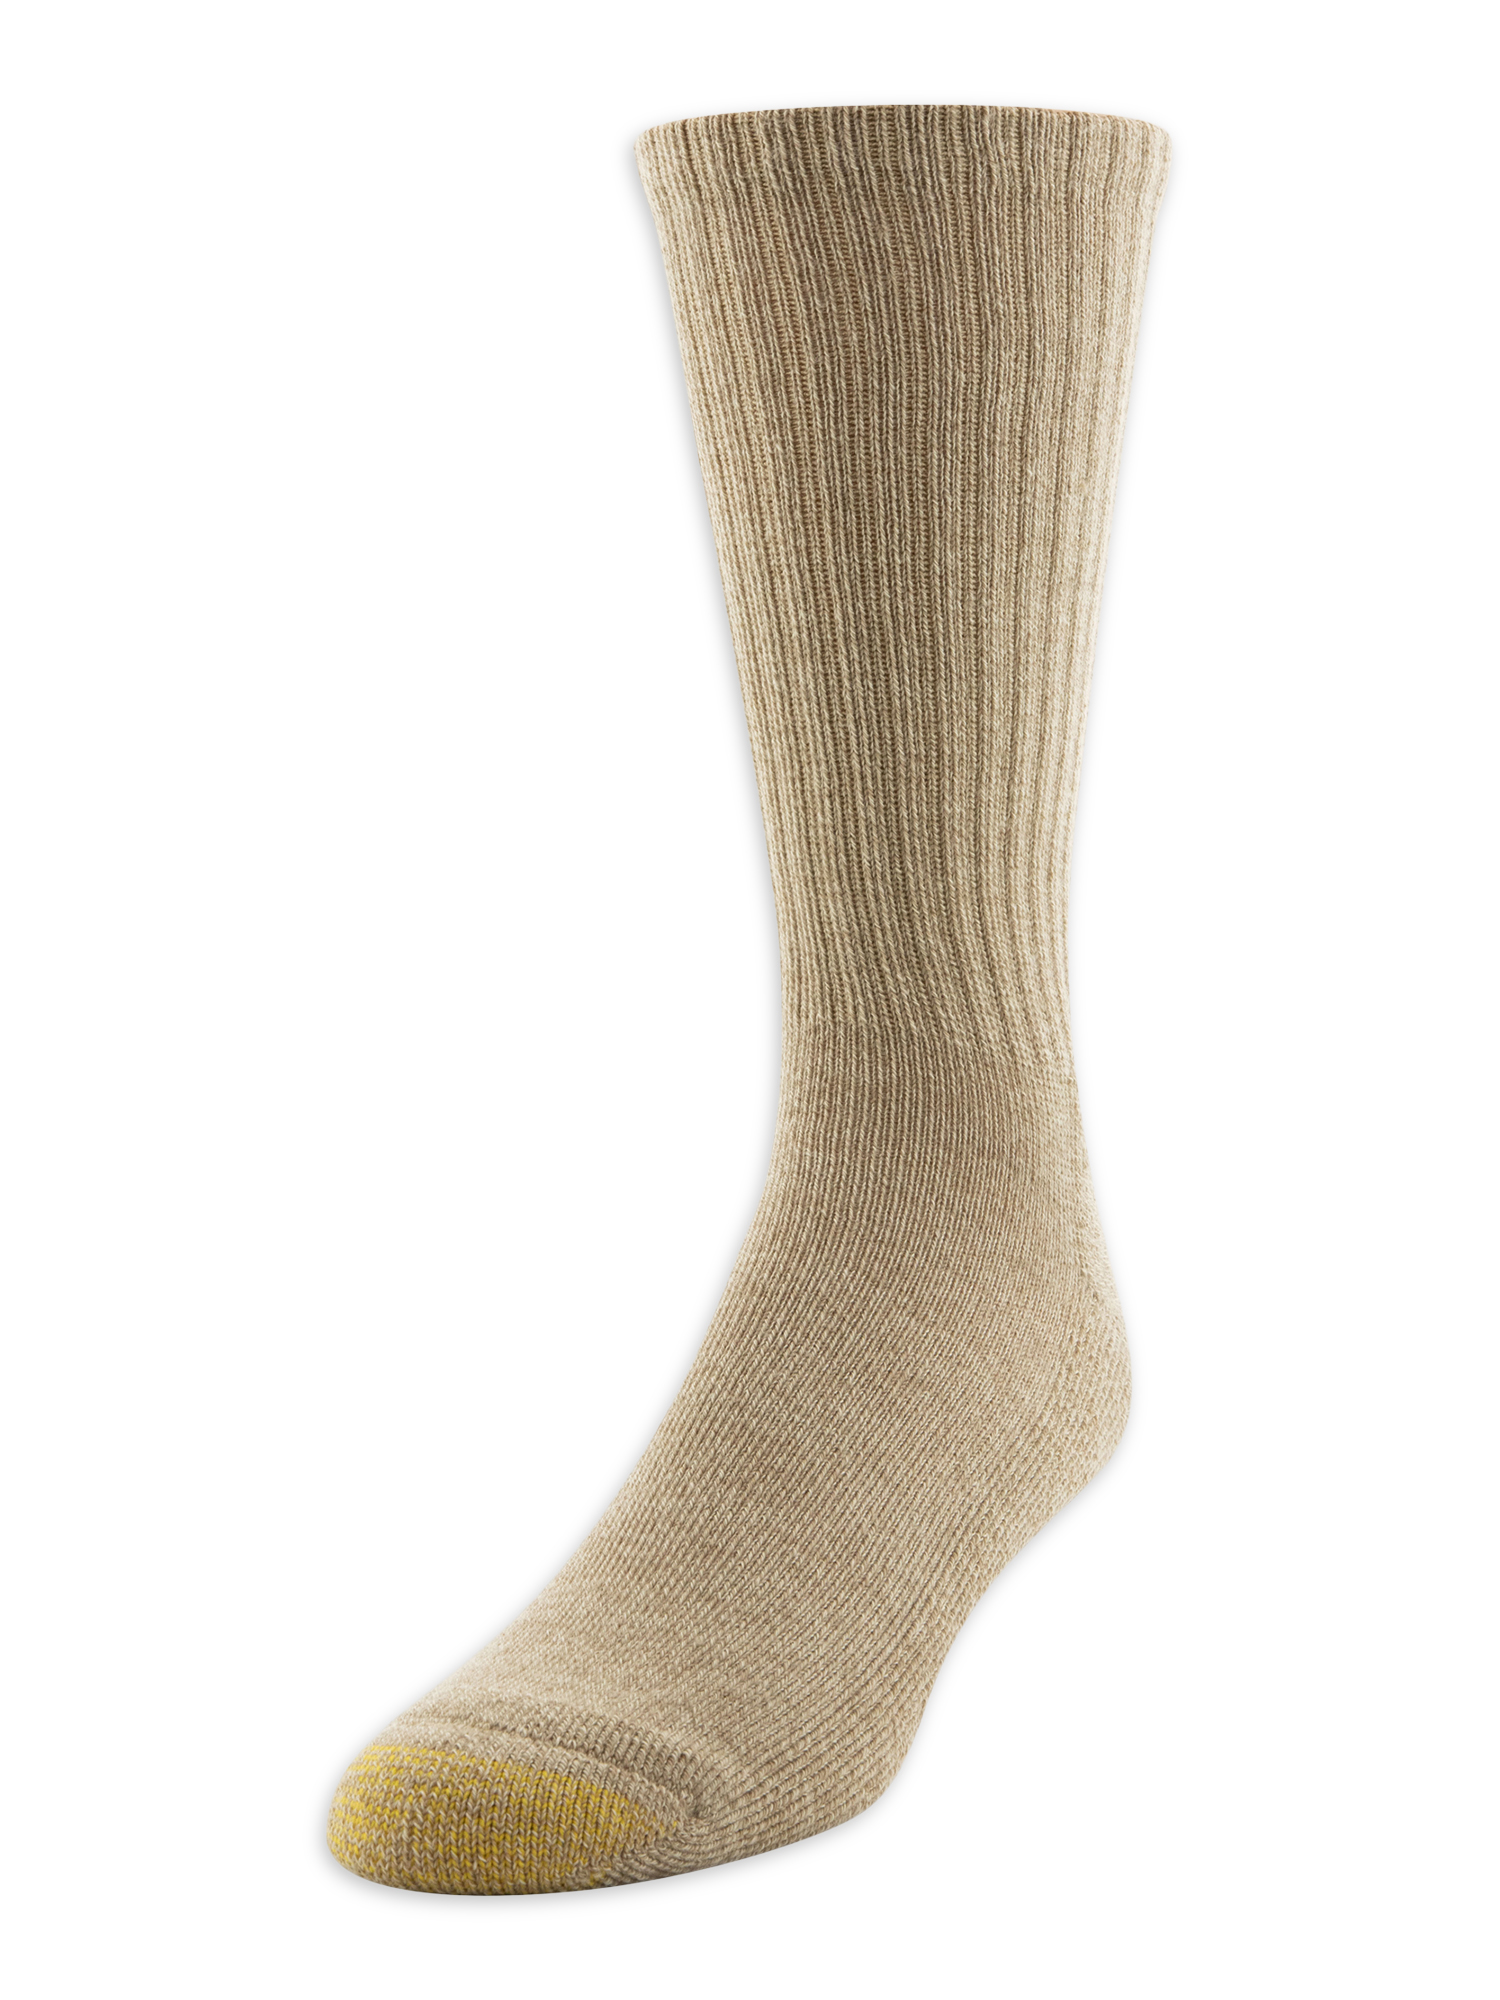 GOLDTOE Edition Men's Casual Cushion Crew Socks, 6-Pack - image 2 of 4